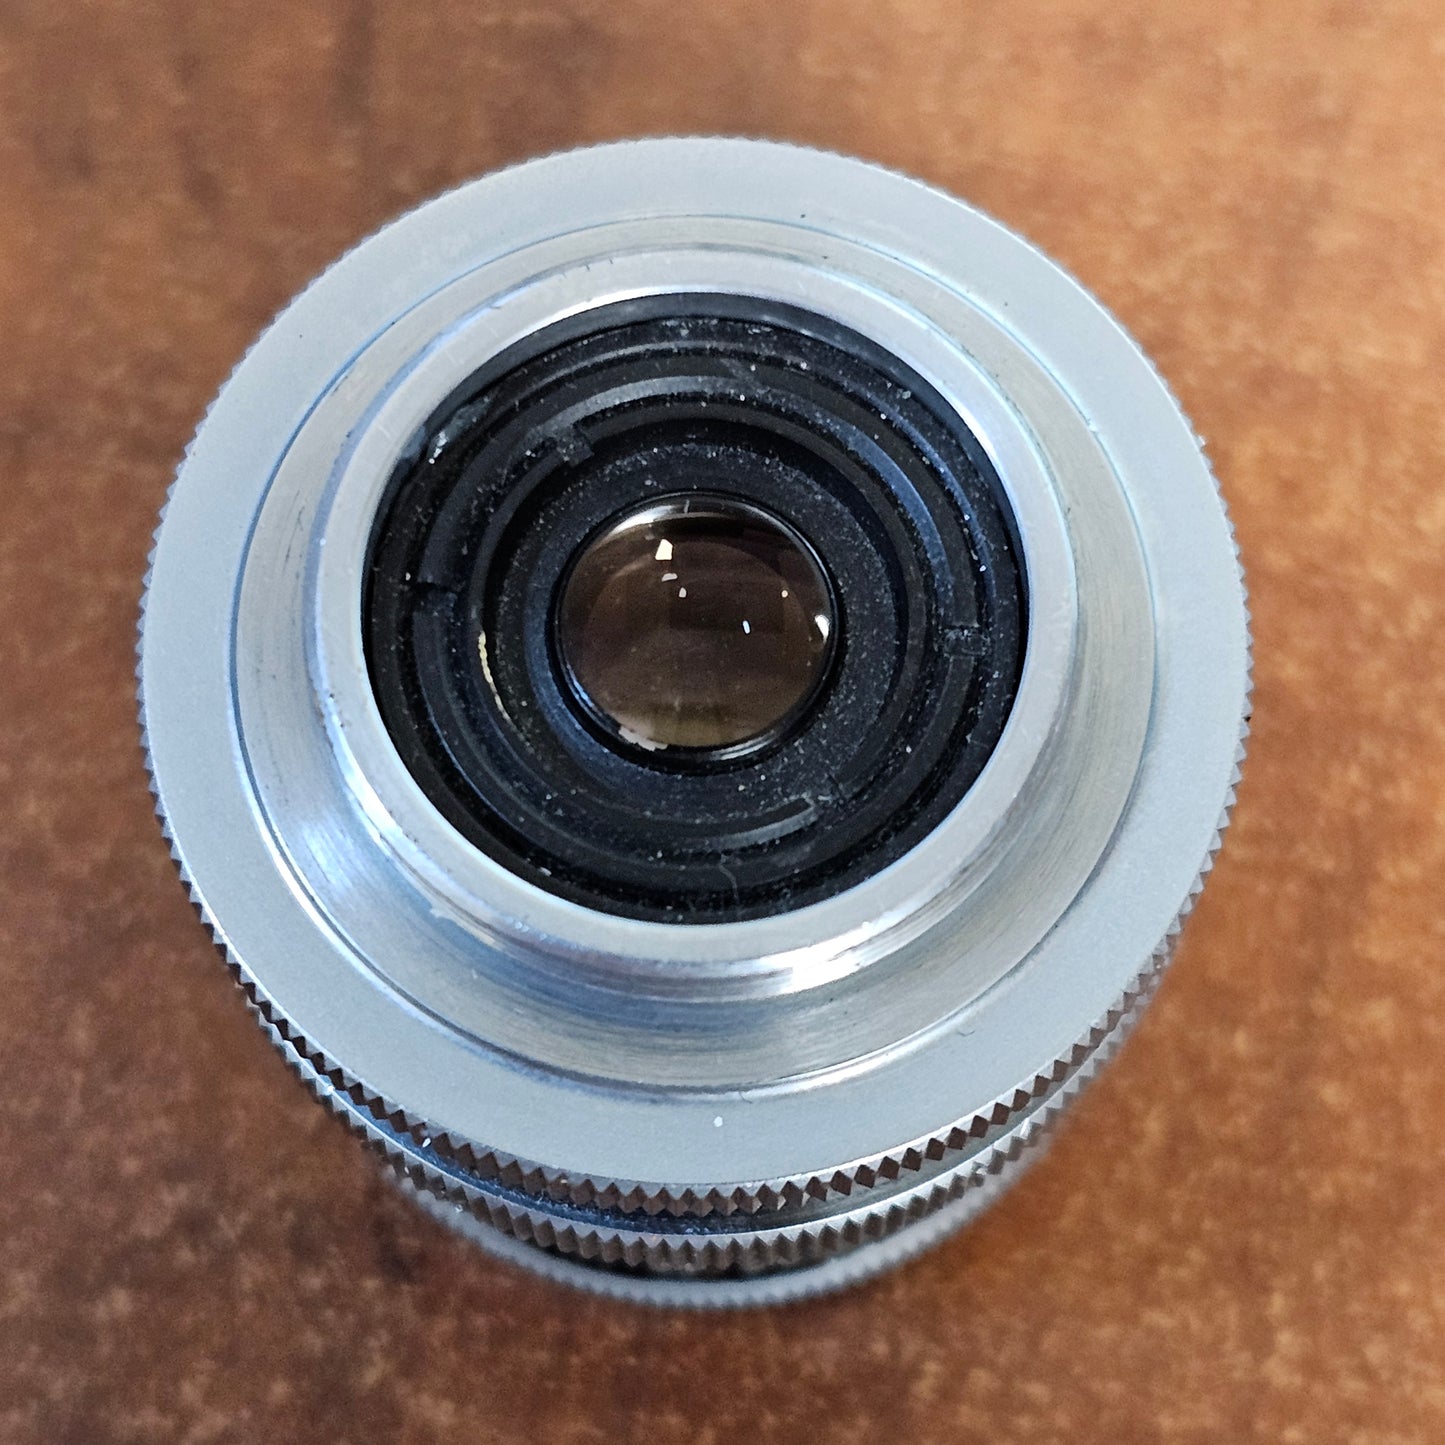 Switar 16mm f1.8 AR C-Mount Lens S# 753156